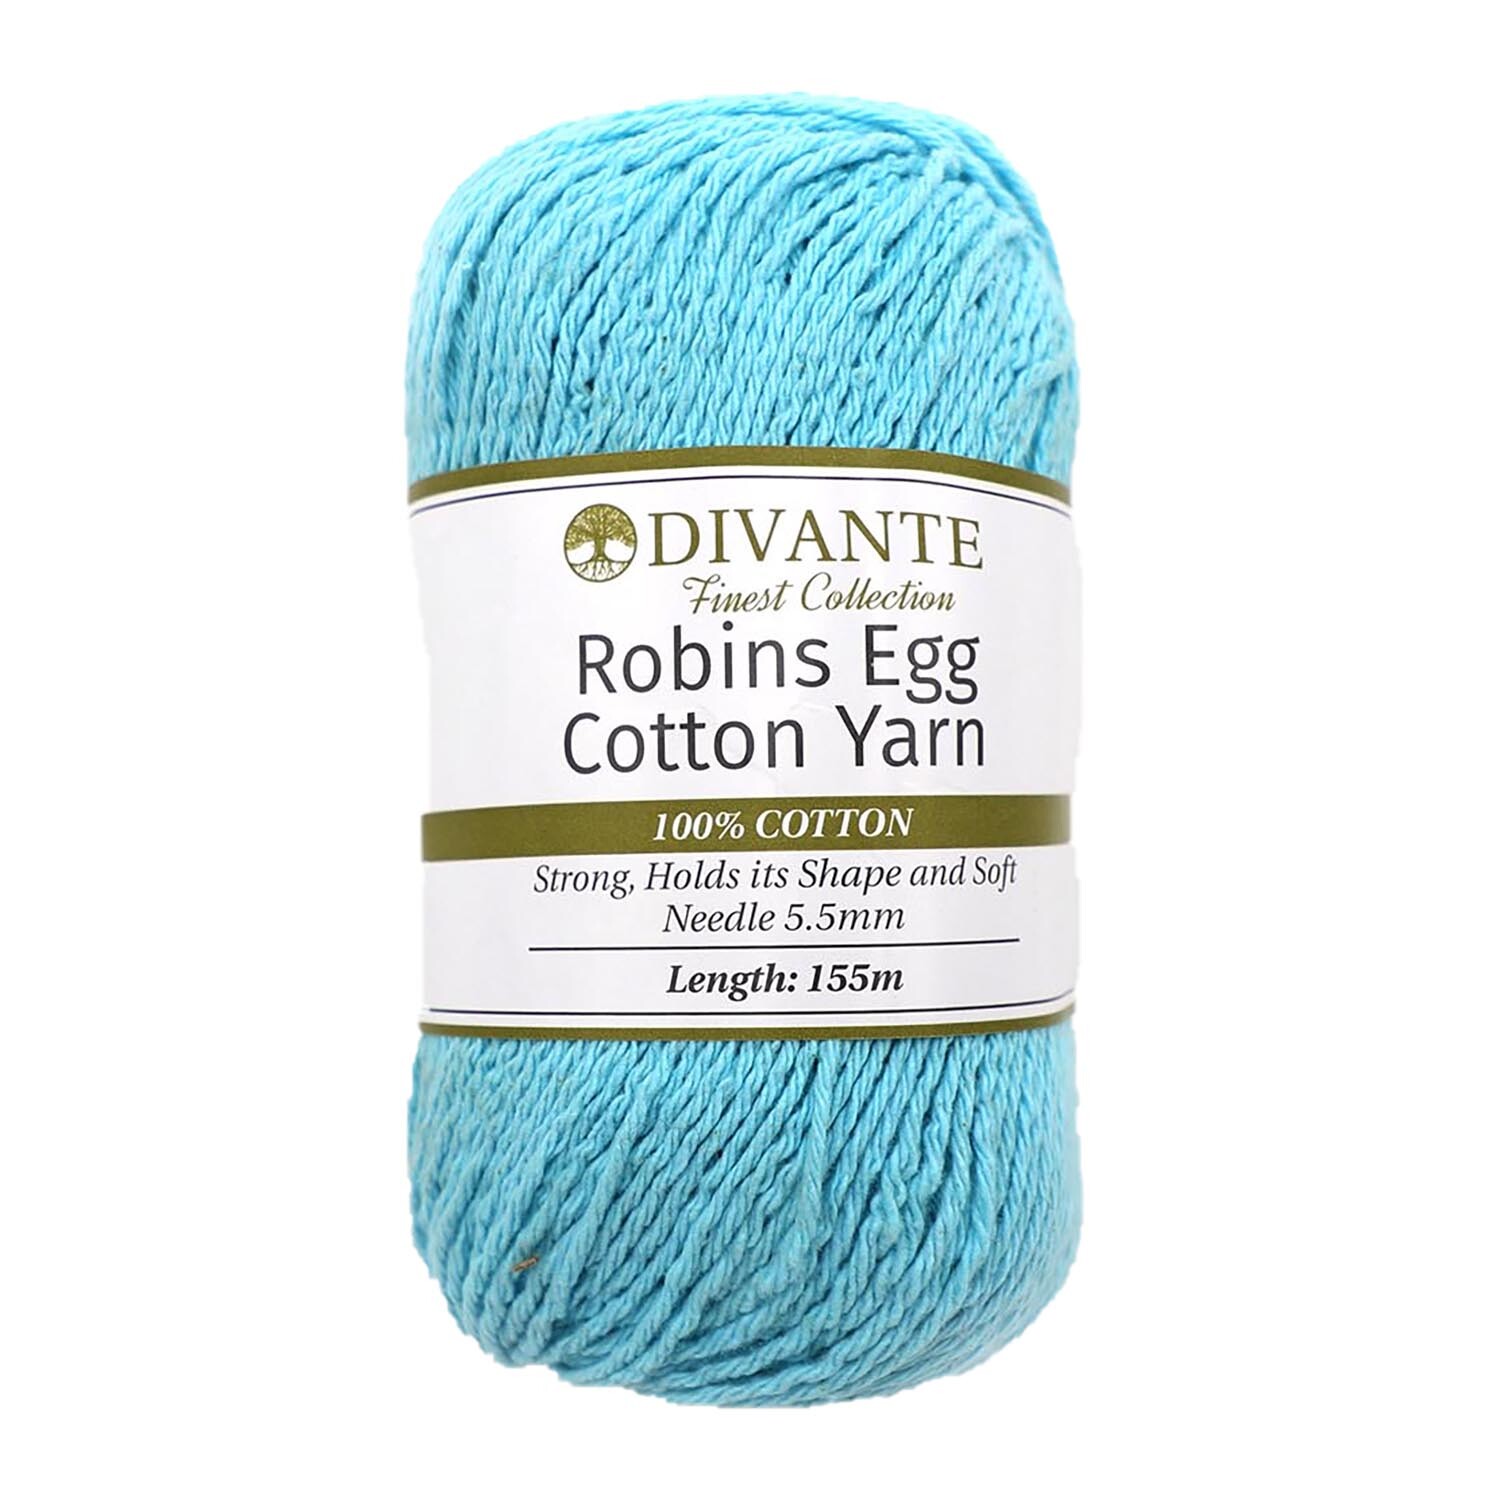 Divante Robbins Egg Cotton Yarn 100g Image